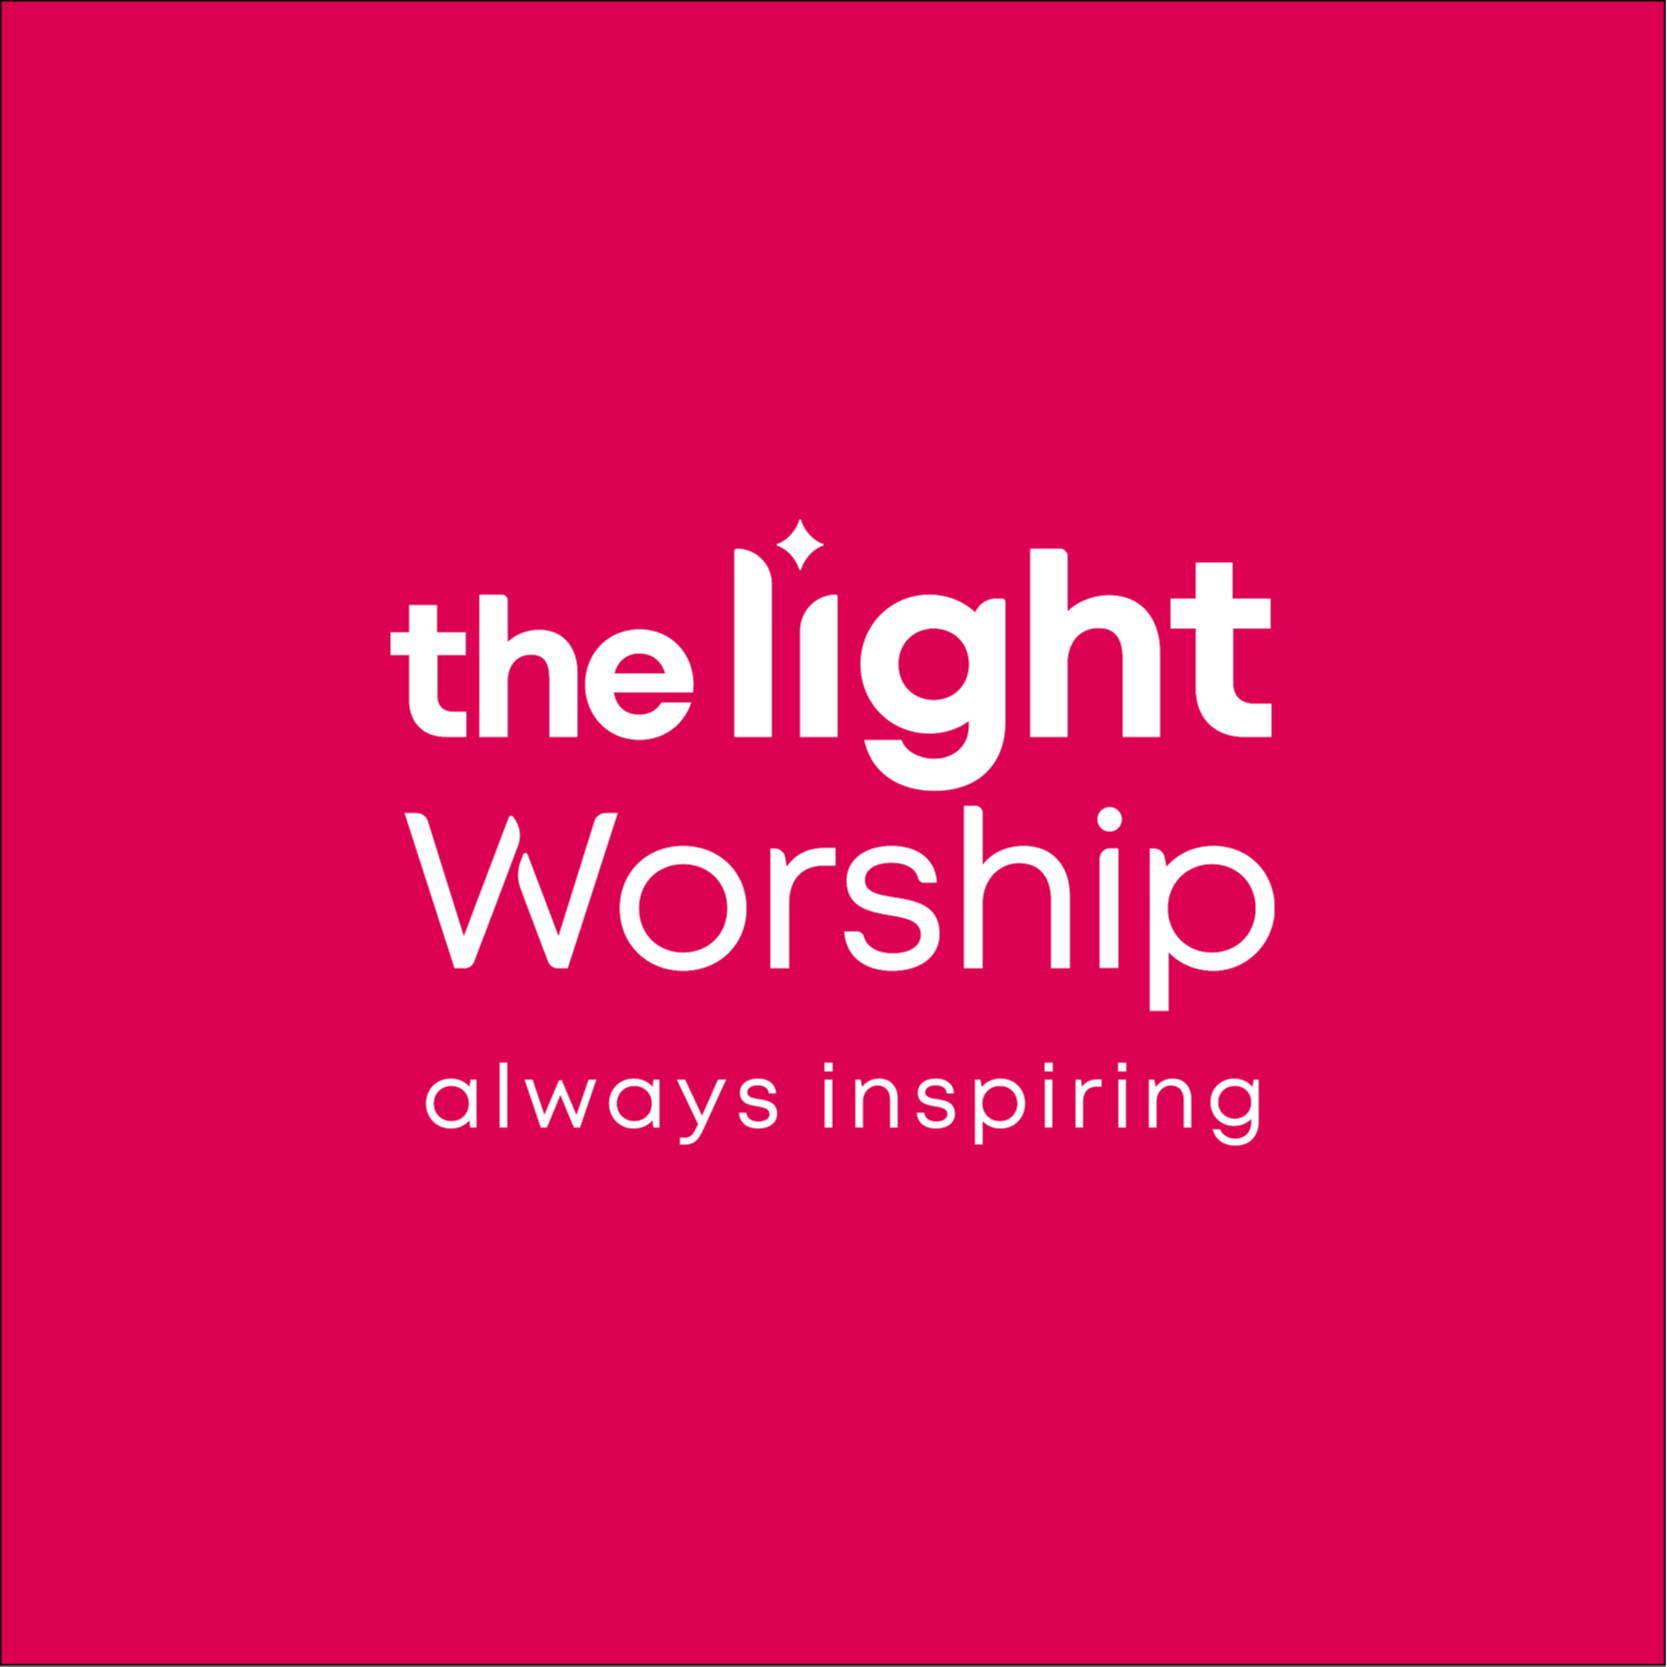 TheLight Worship